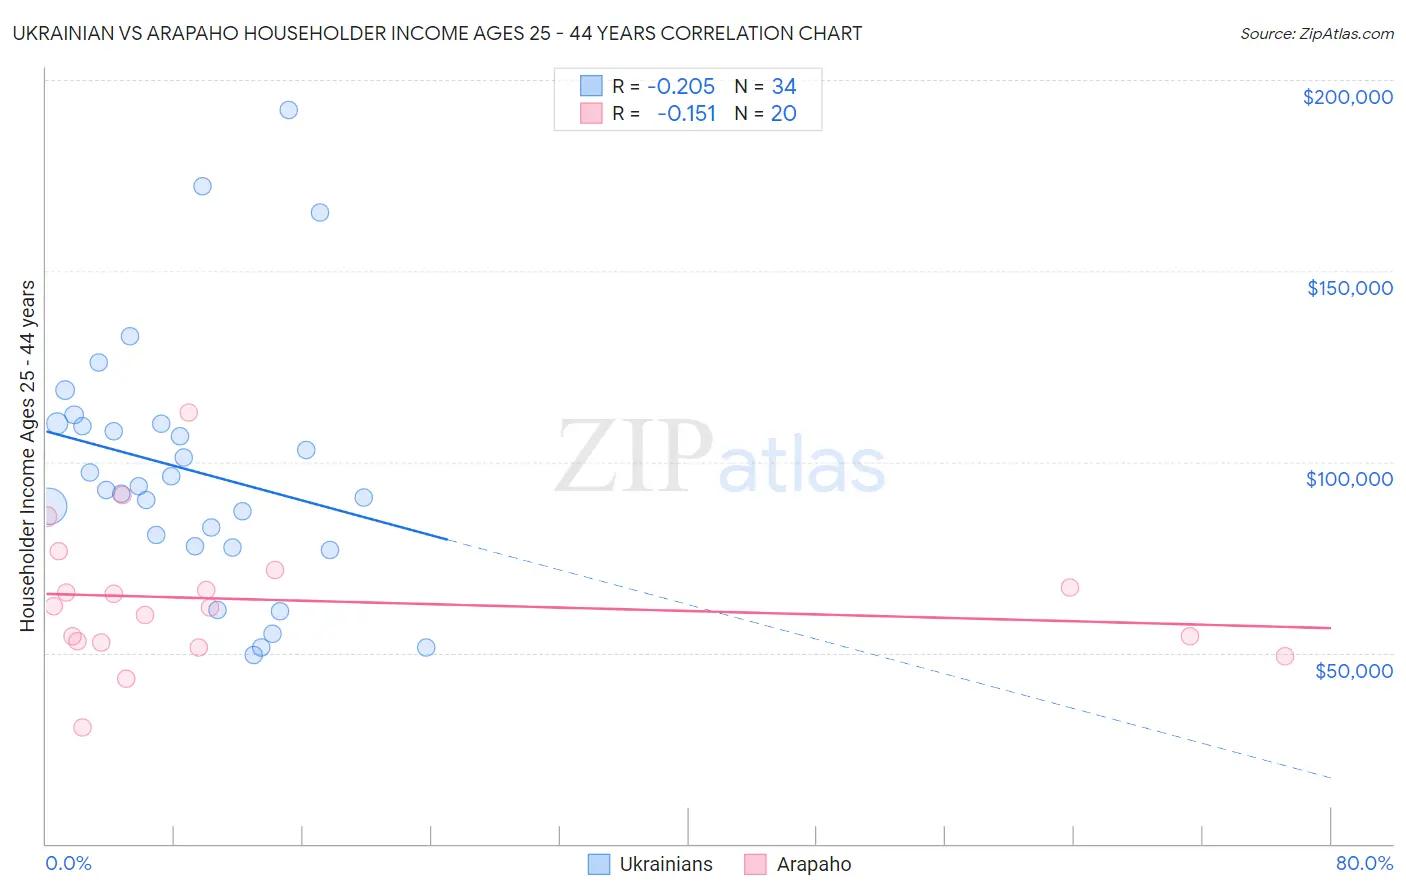 Ukrainian vs Arapaho Householder Income Ages 25 - 44 years